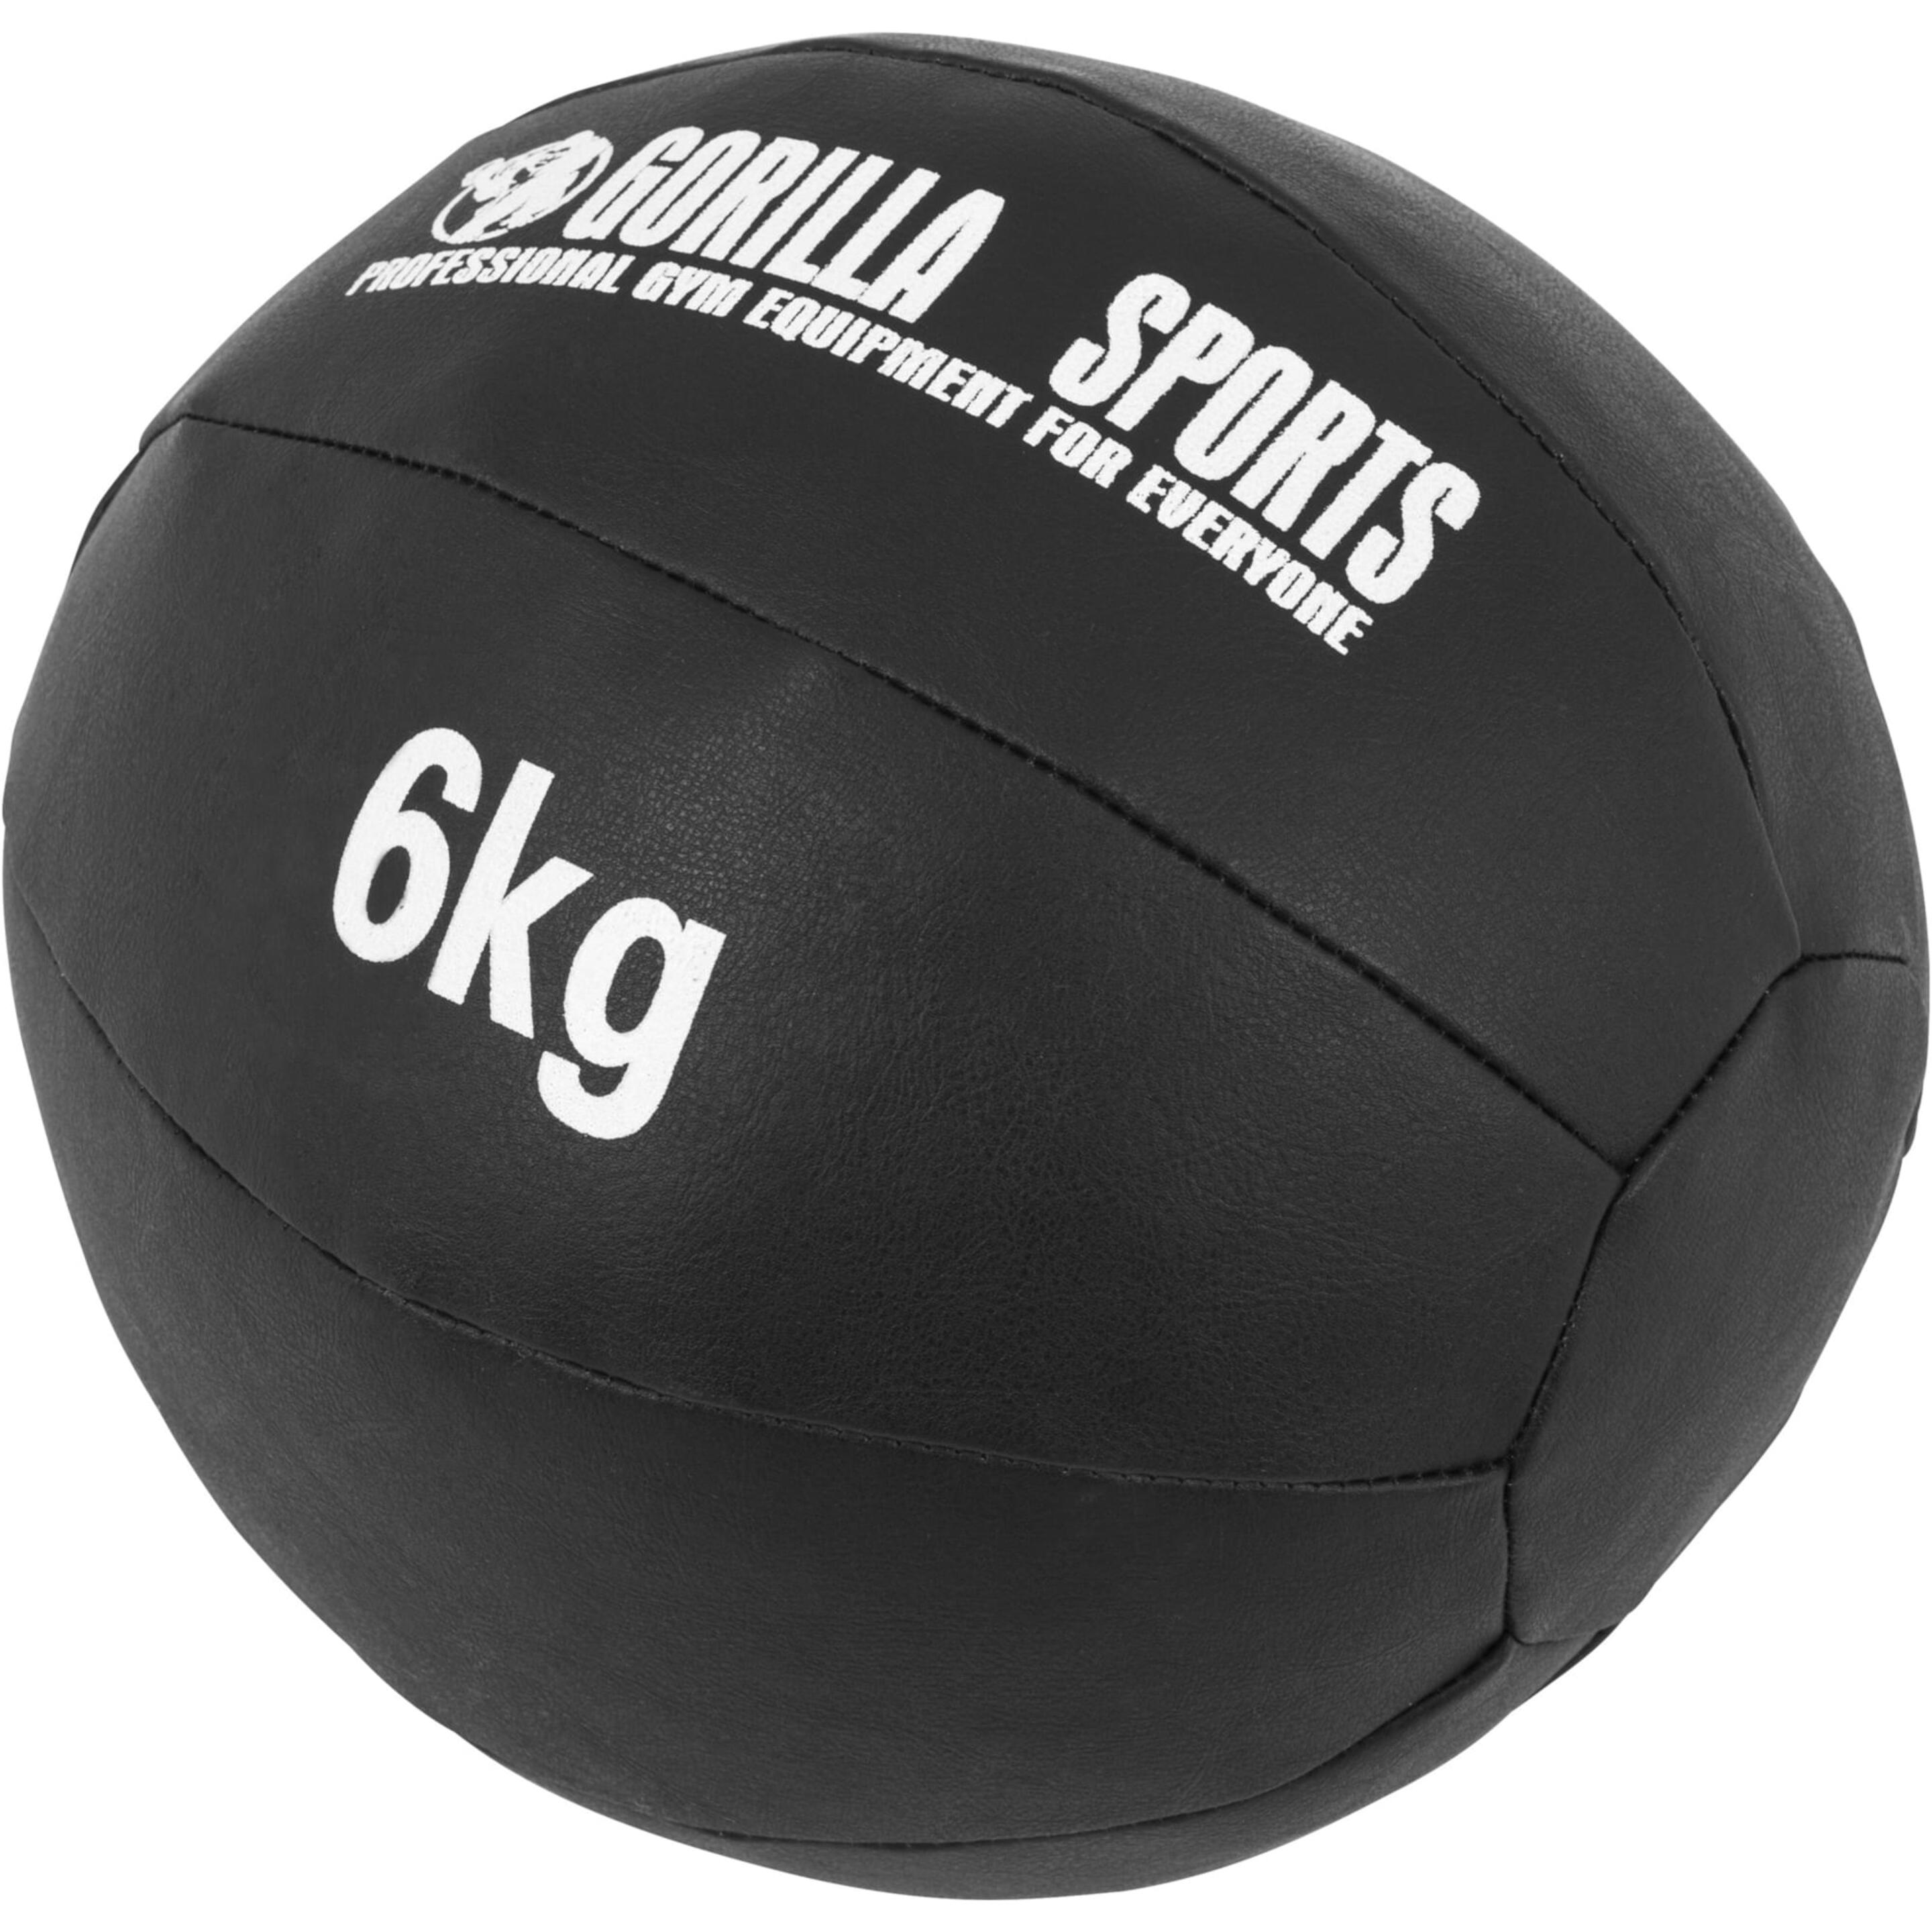 Balón Medicinal De Cuero 6 Kg Gorilla Sports